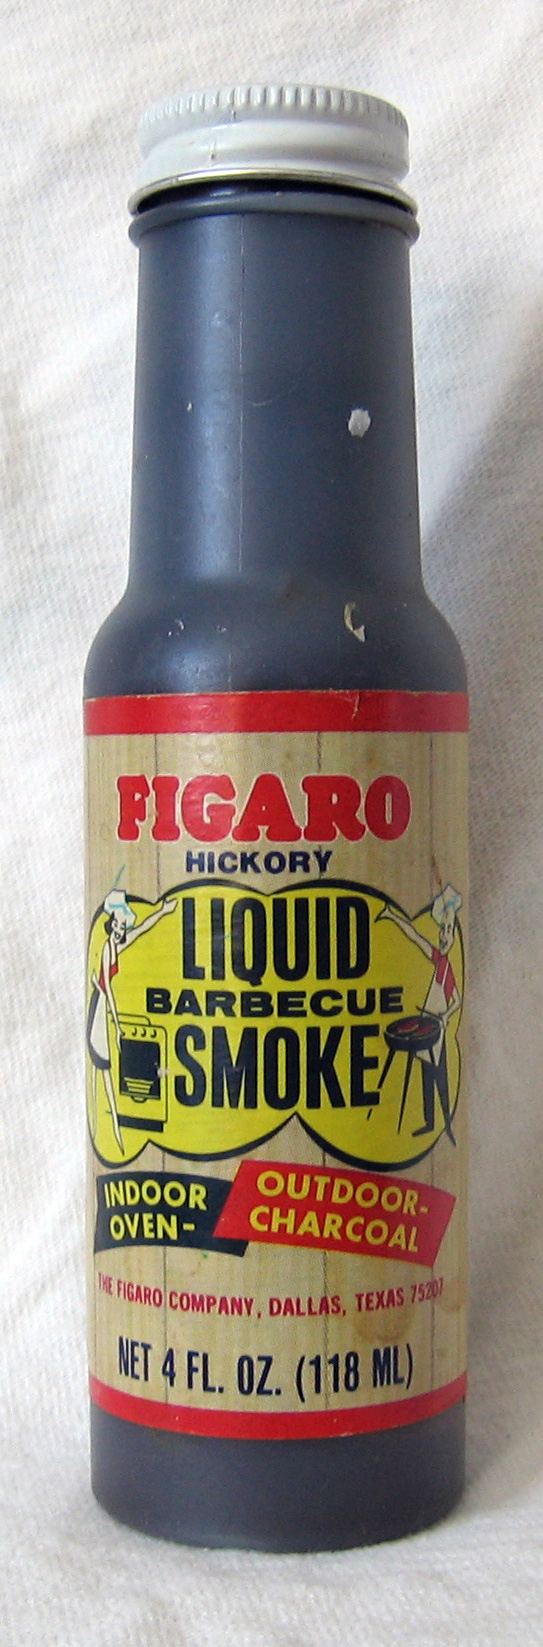 Figaro Hickory Liquid Smoke